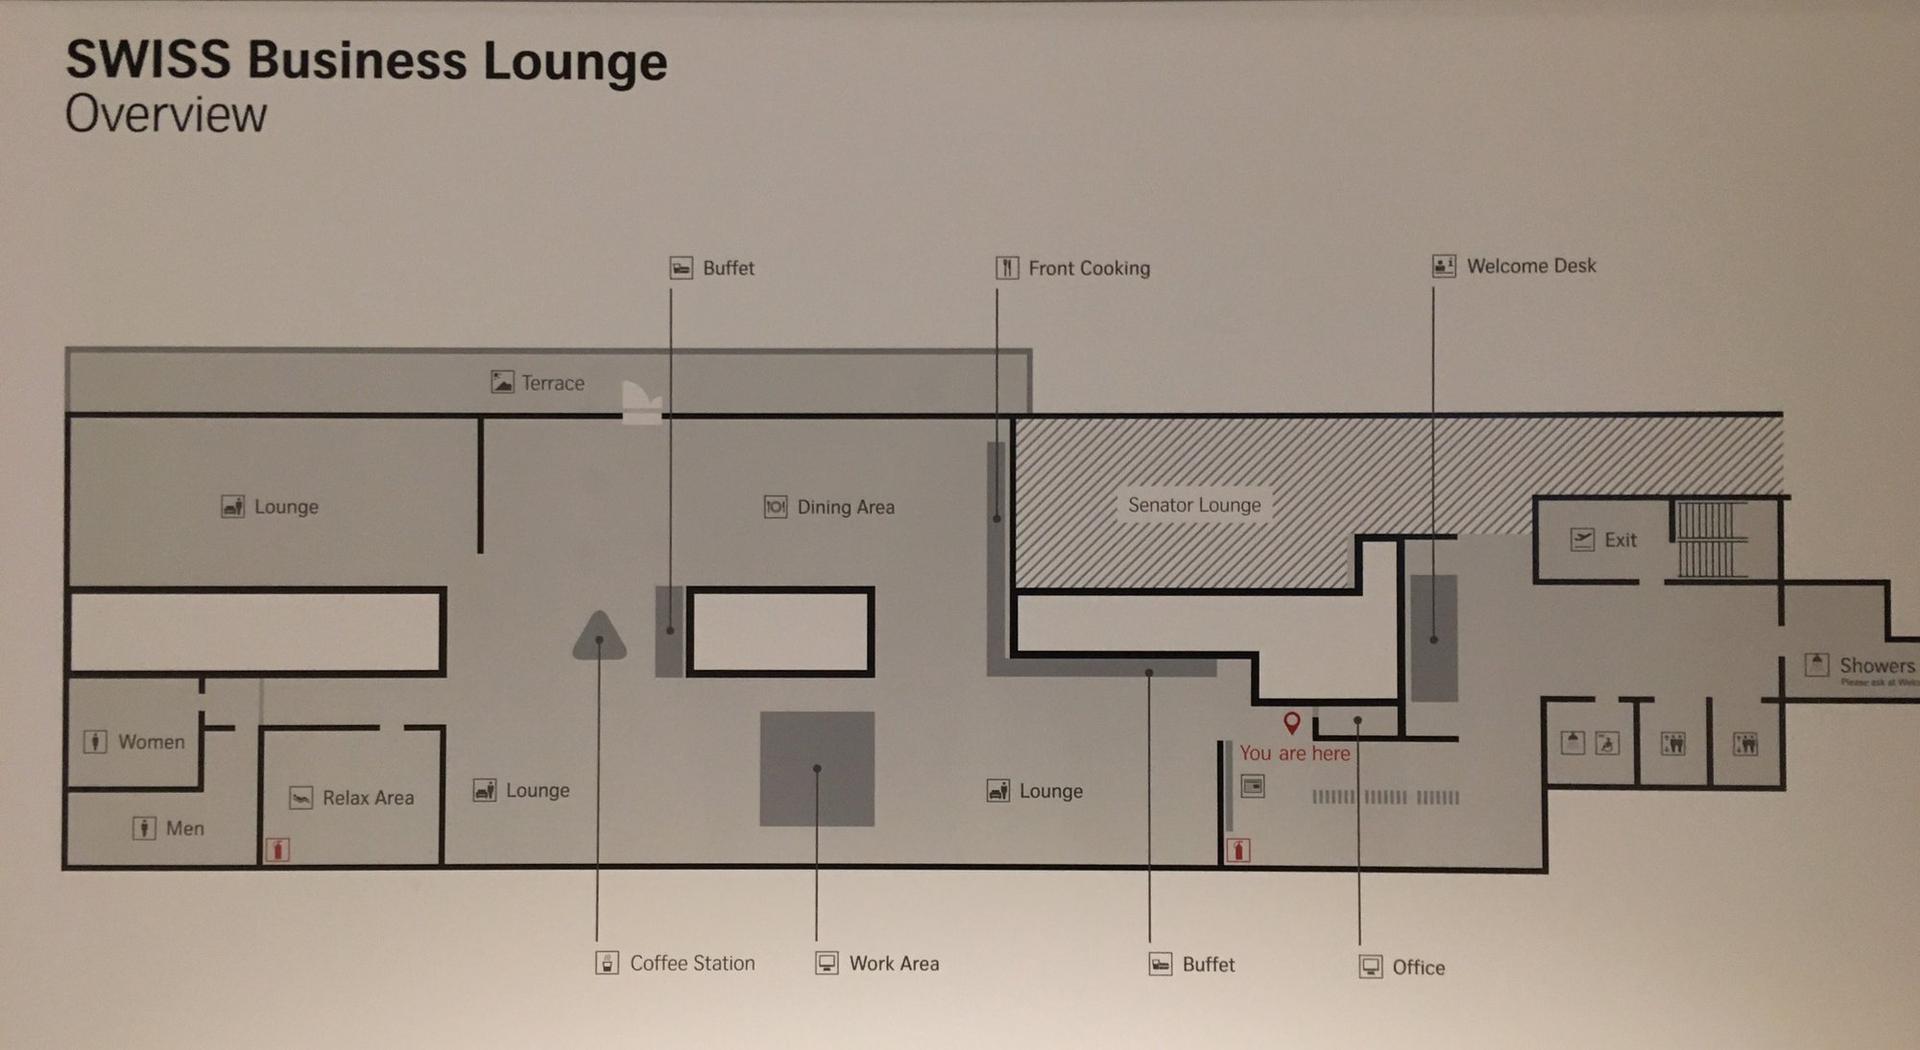 SWISS Business Lounge image 1 of 33